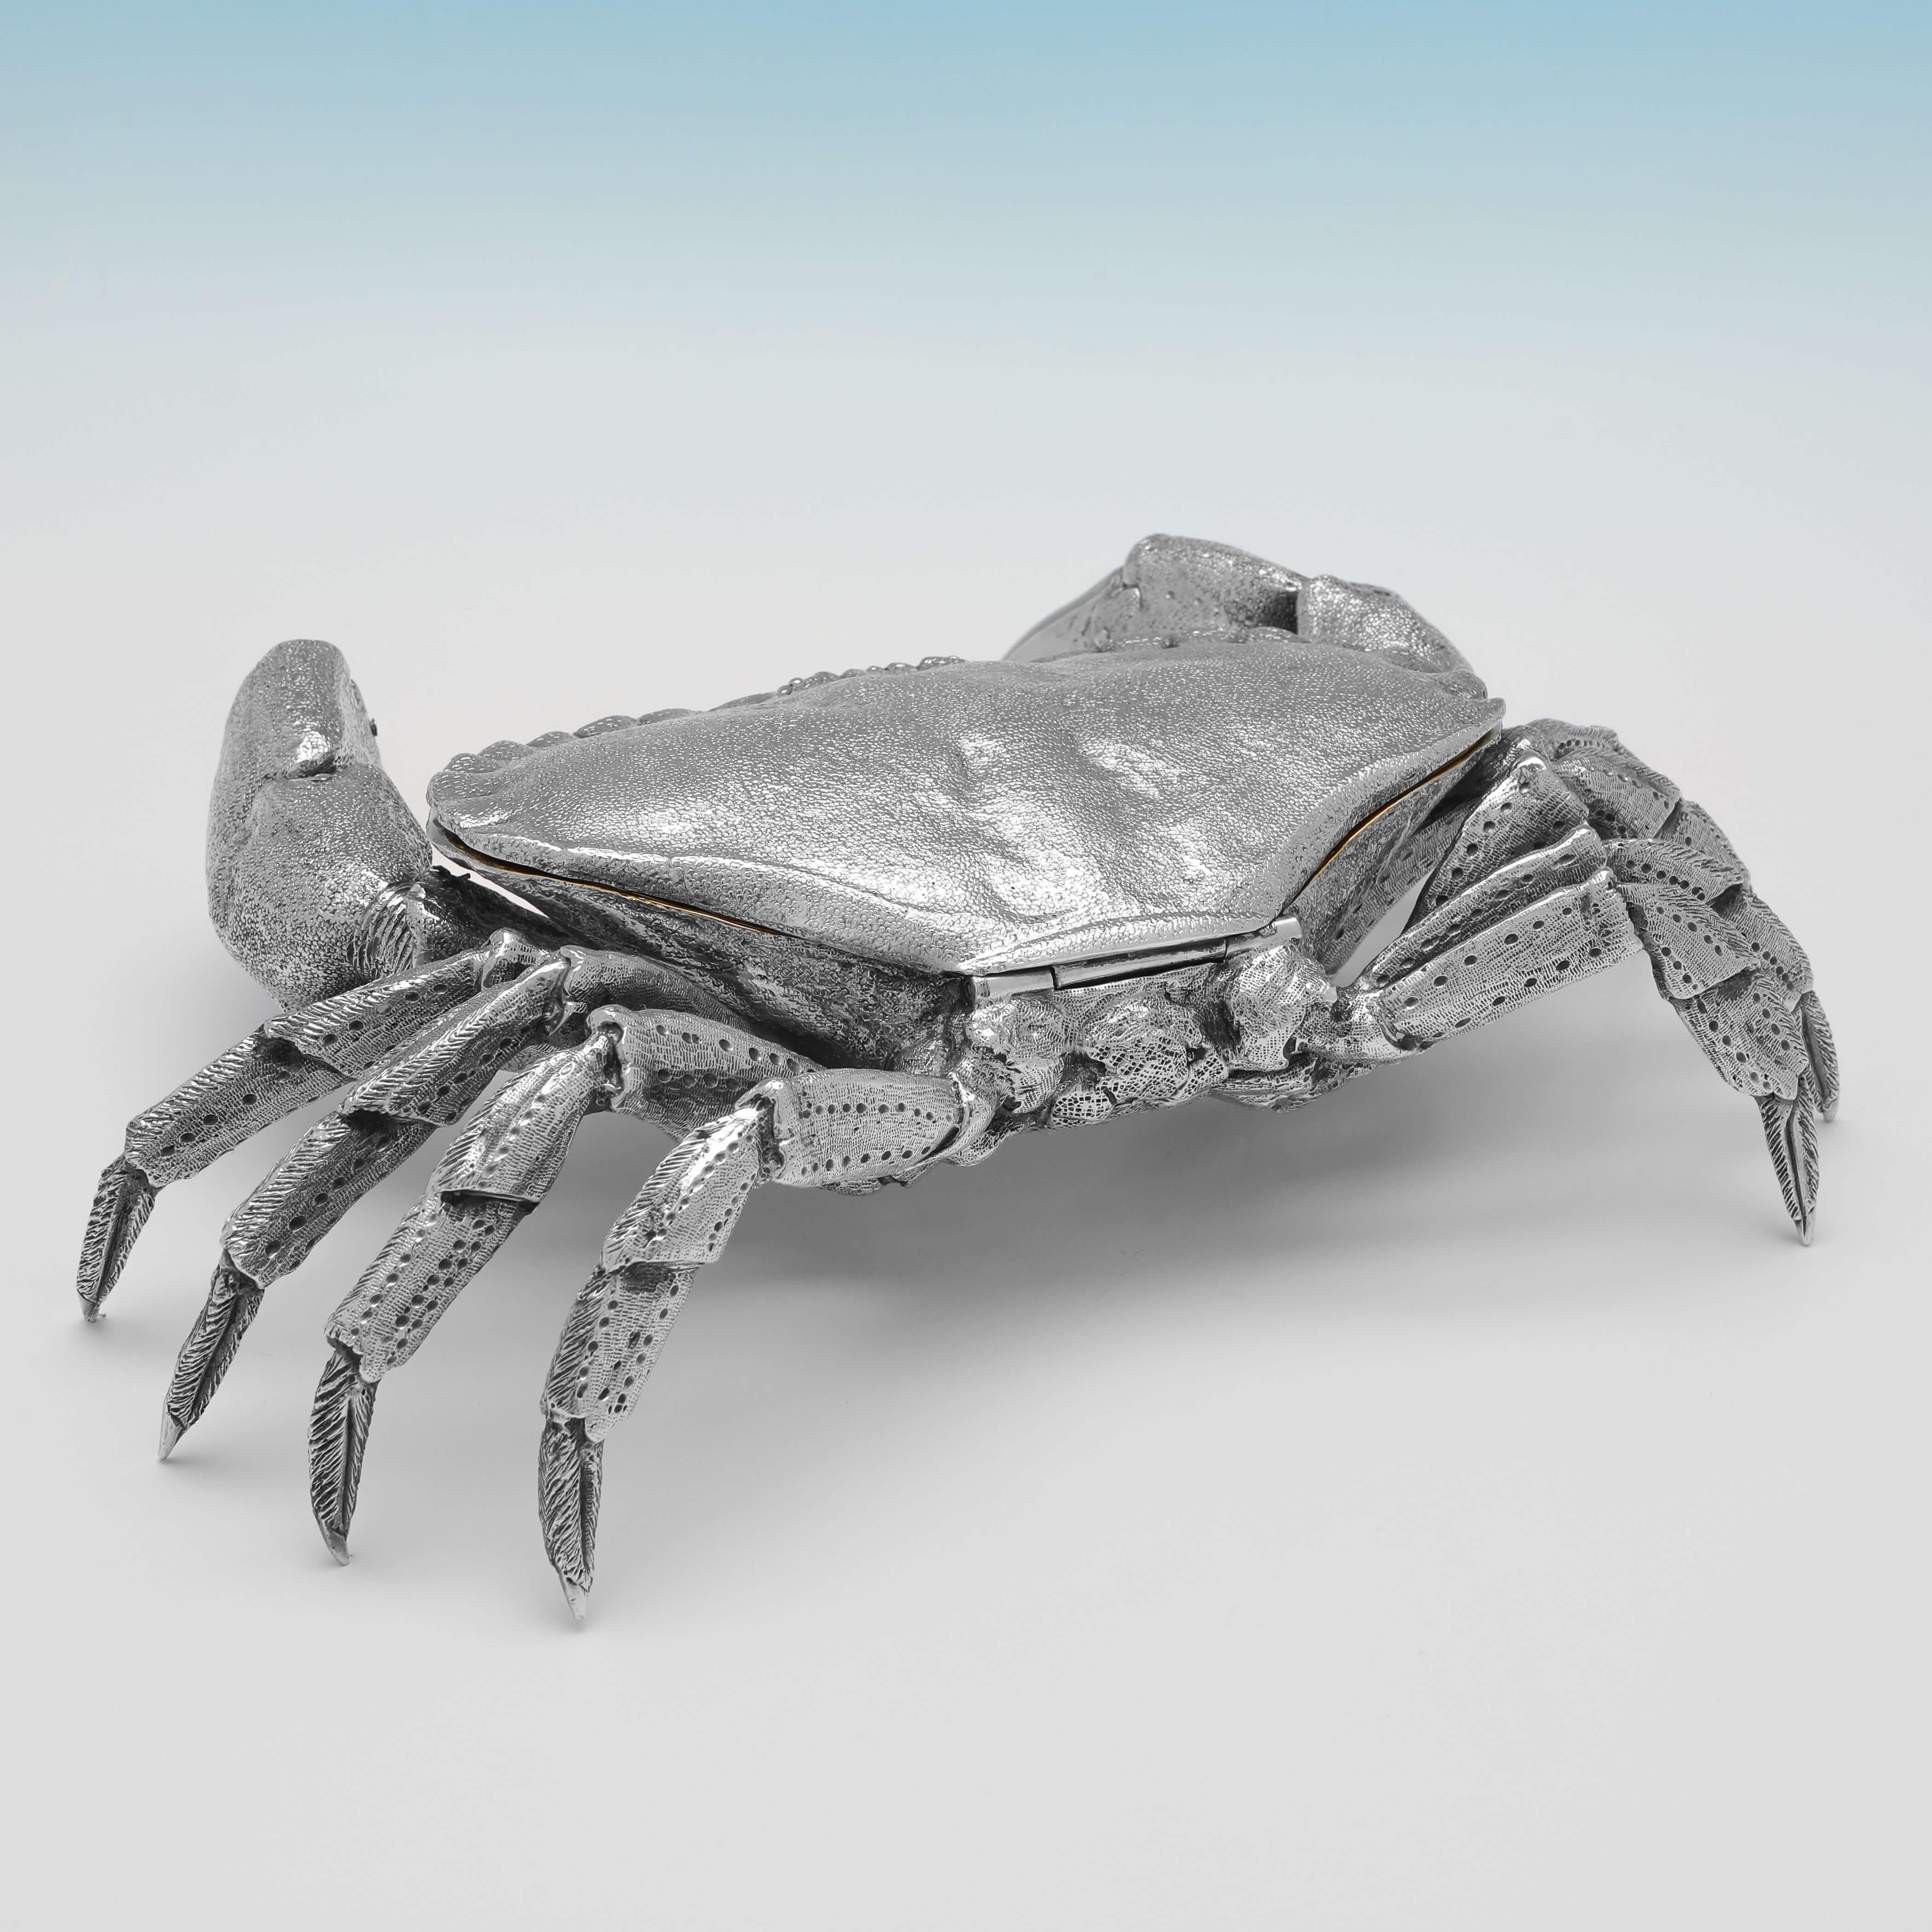 human sized crab